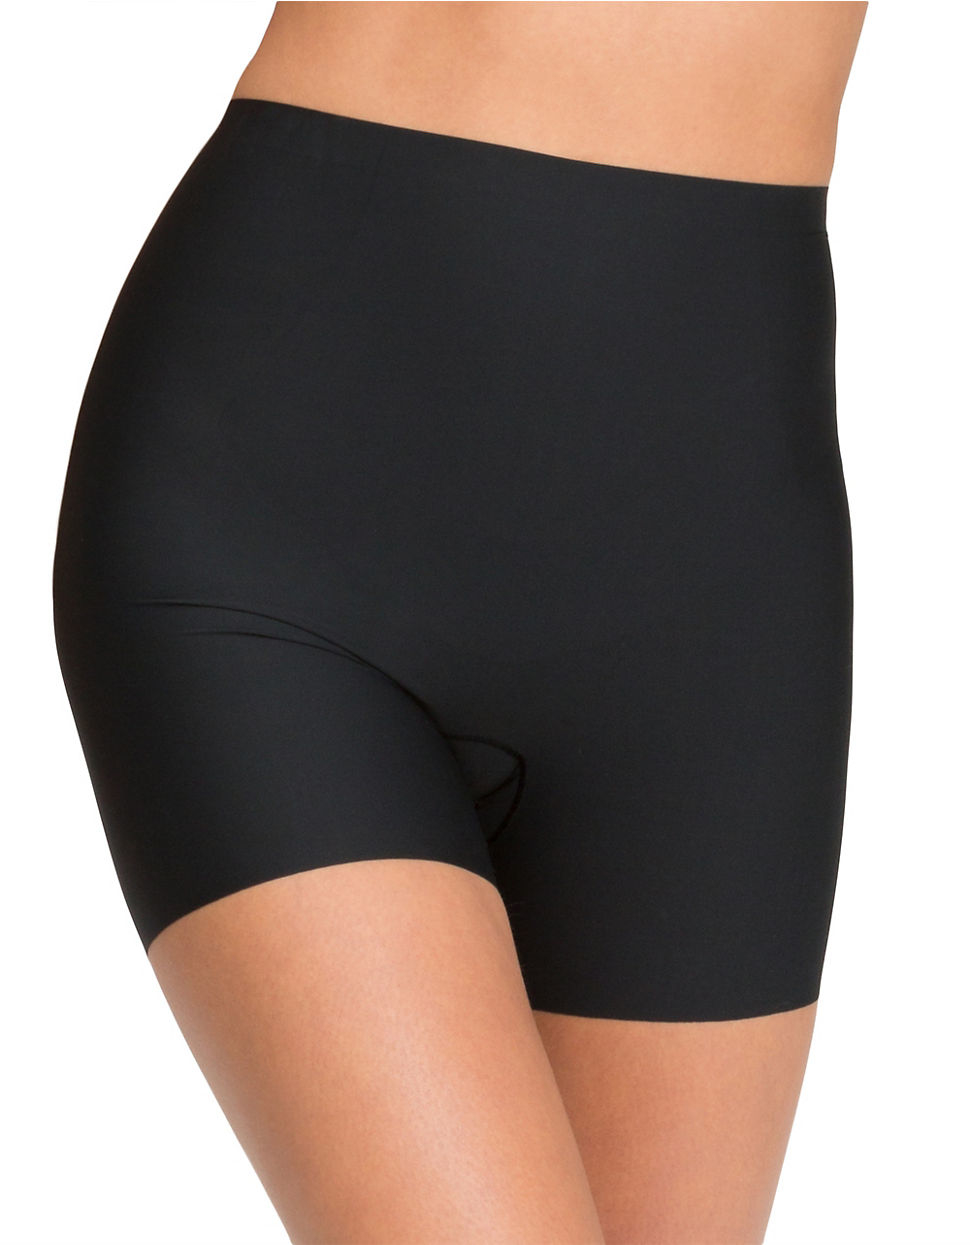 Lyst - Spanx Thinstincts Girl Shaper Shorts in Black